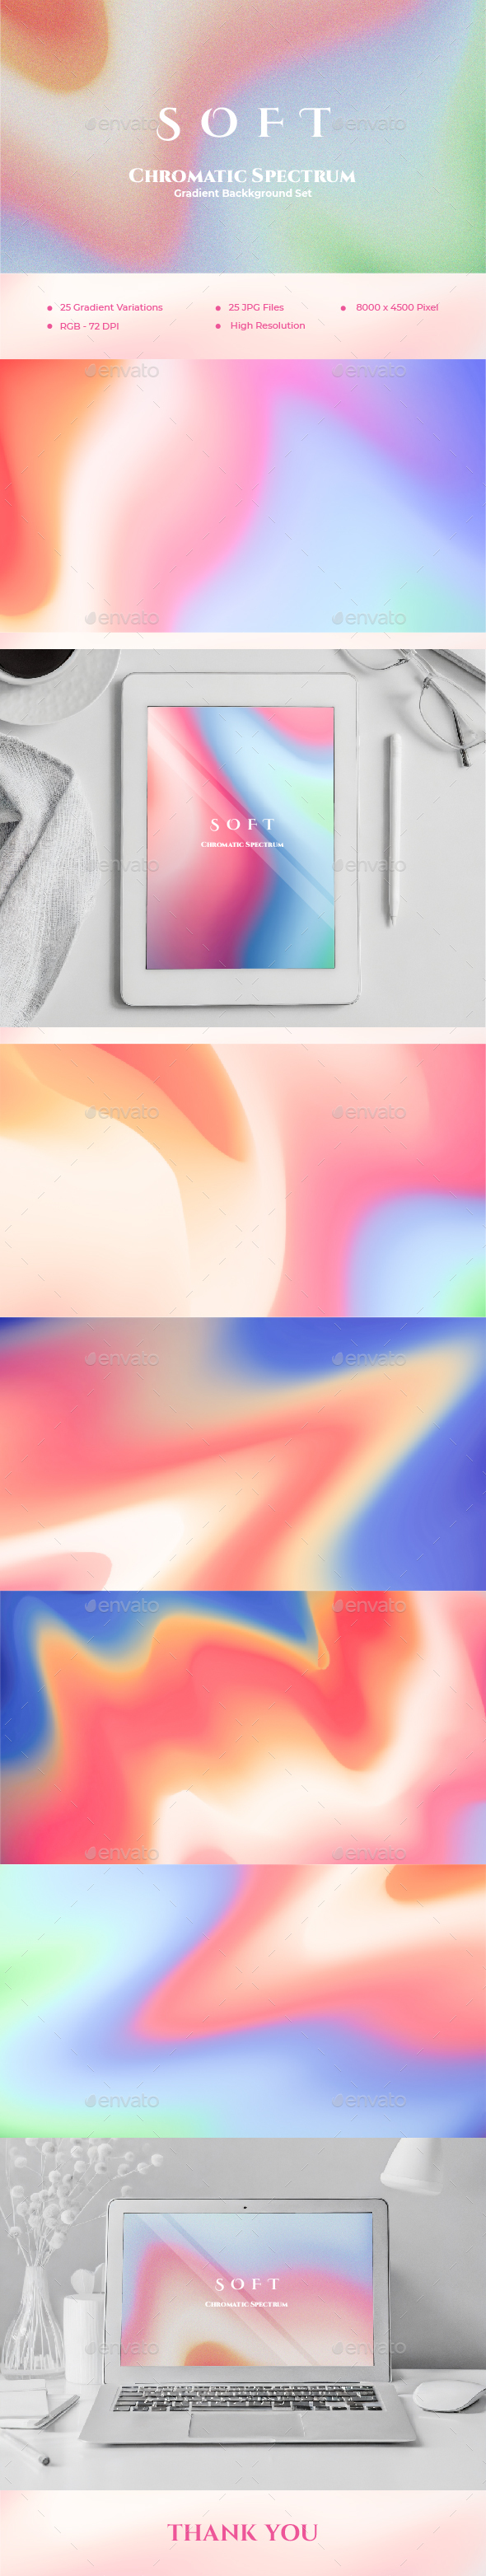 [DOWNLOAD]Soft Chromatic Spectrum - Gradient Background Set